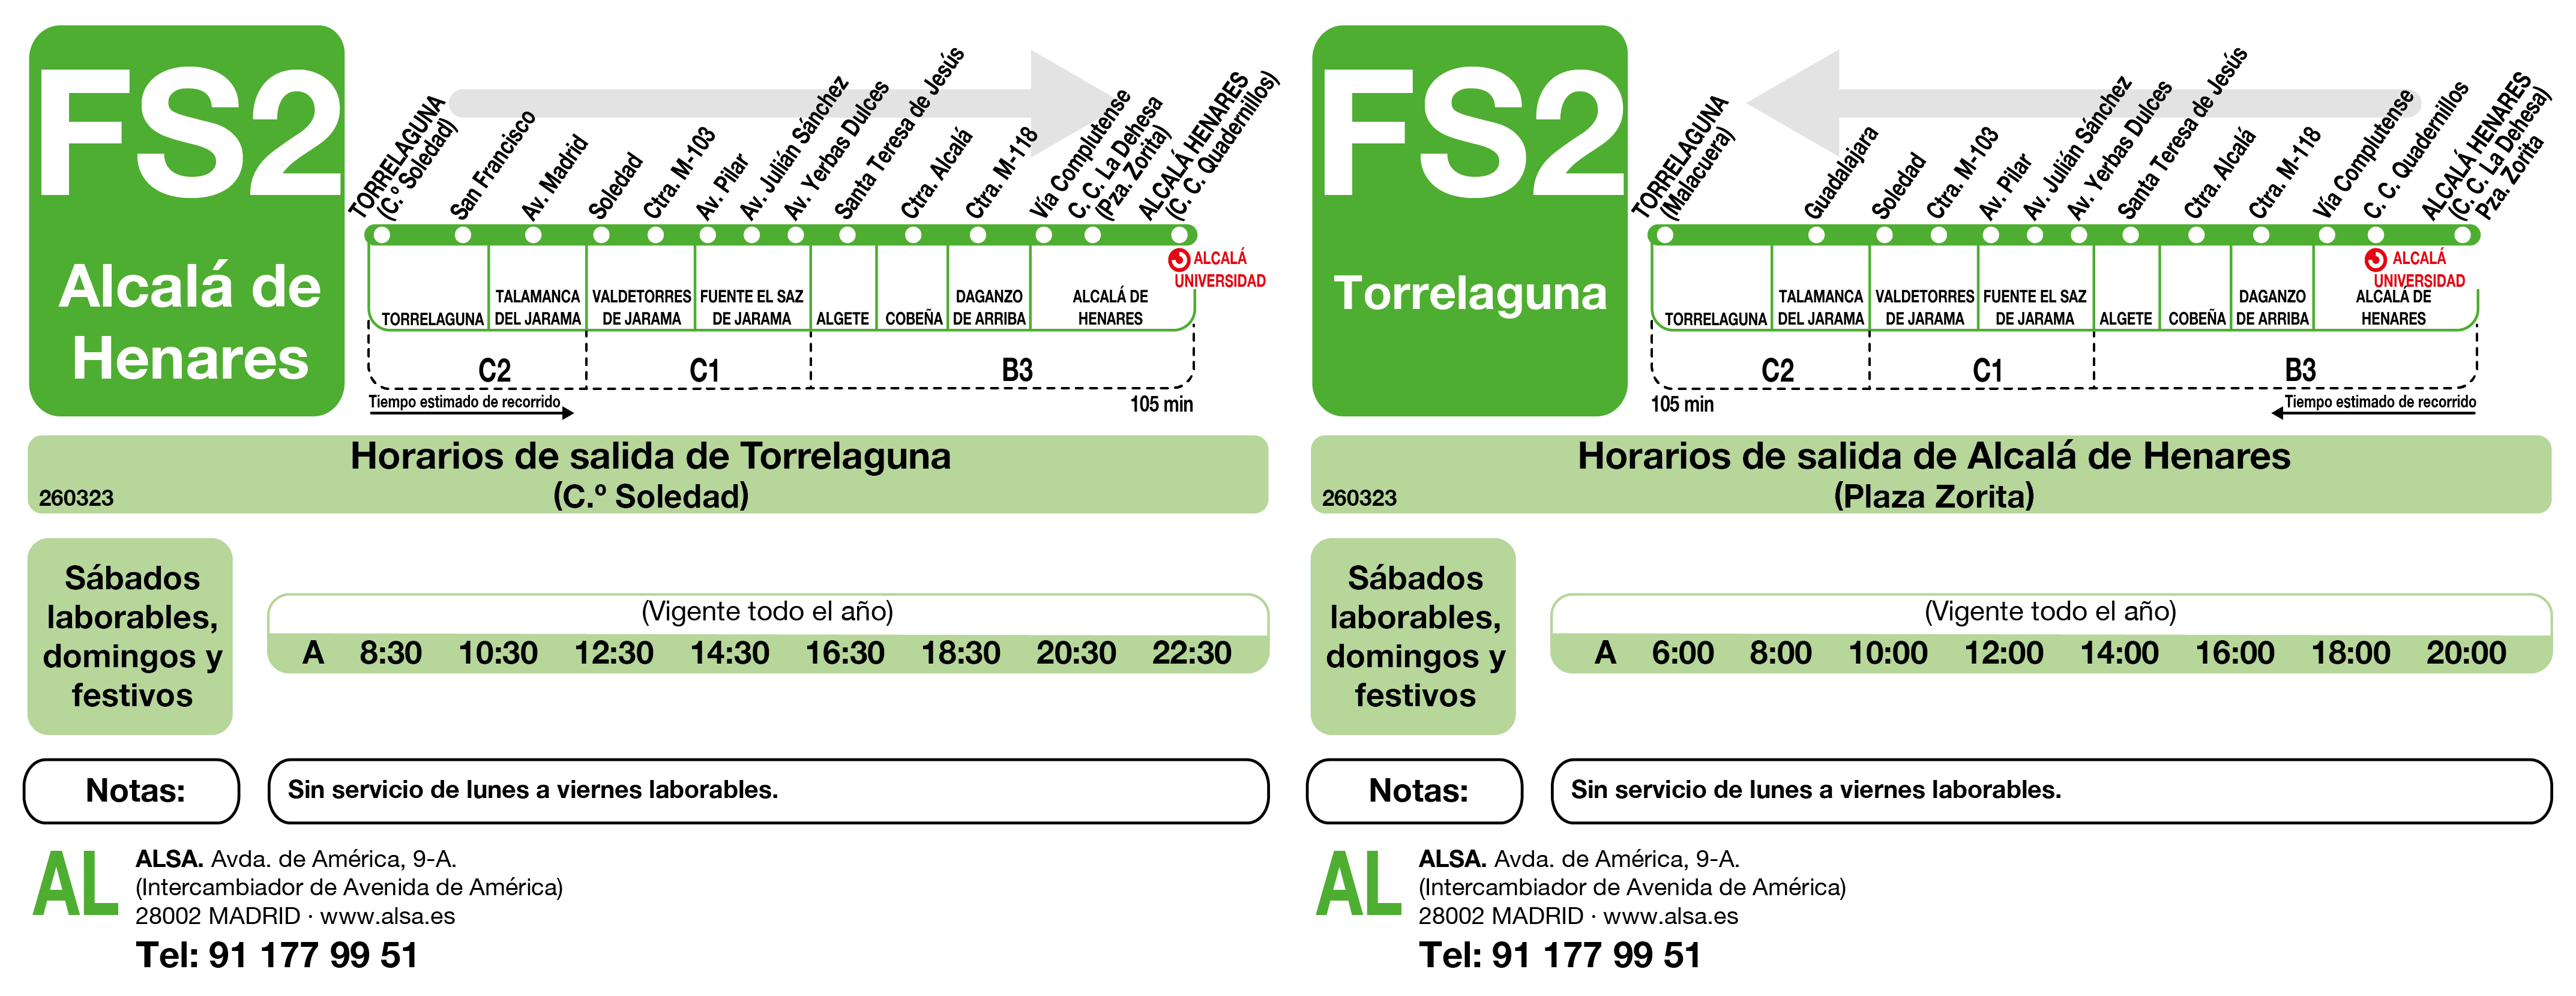 FS2 esquema